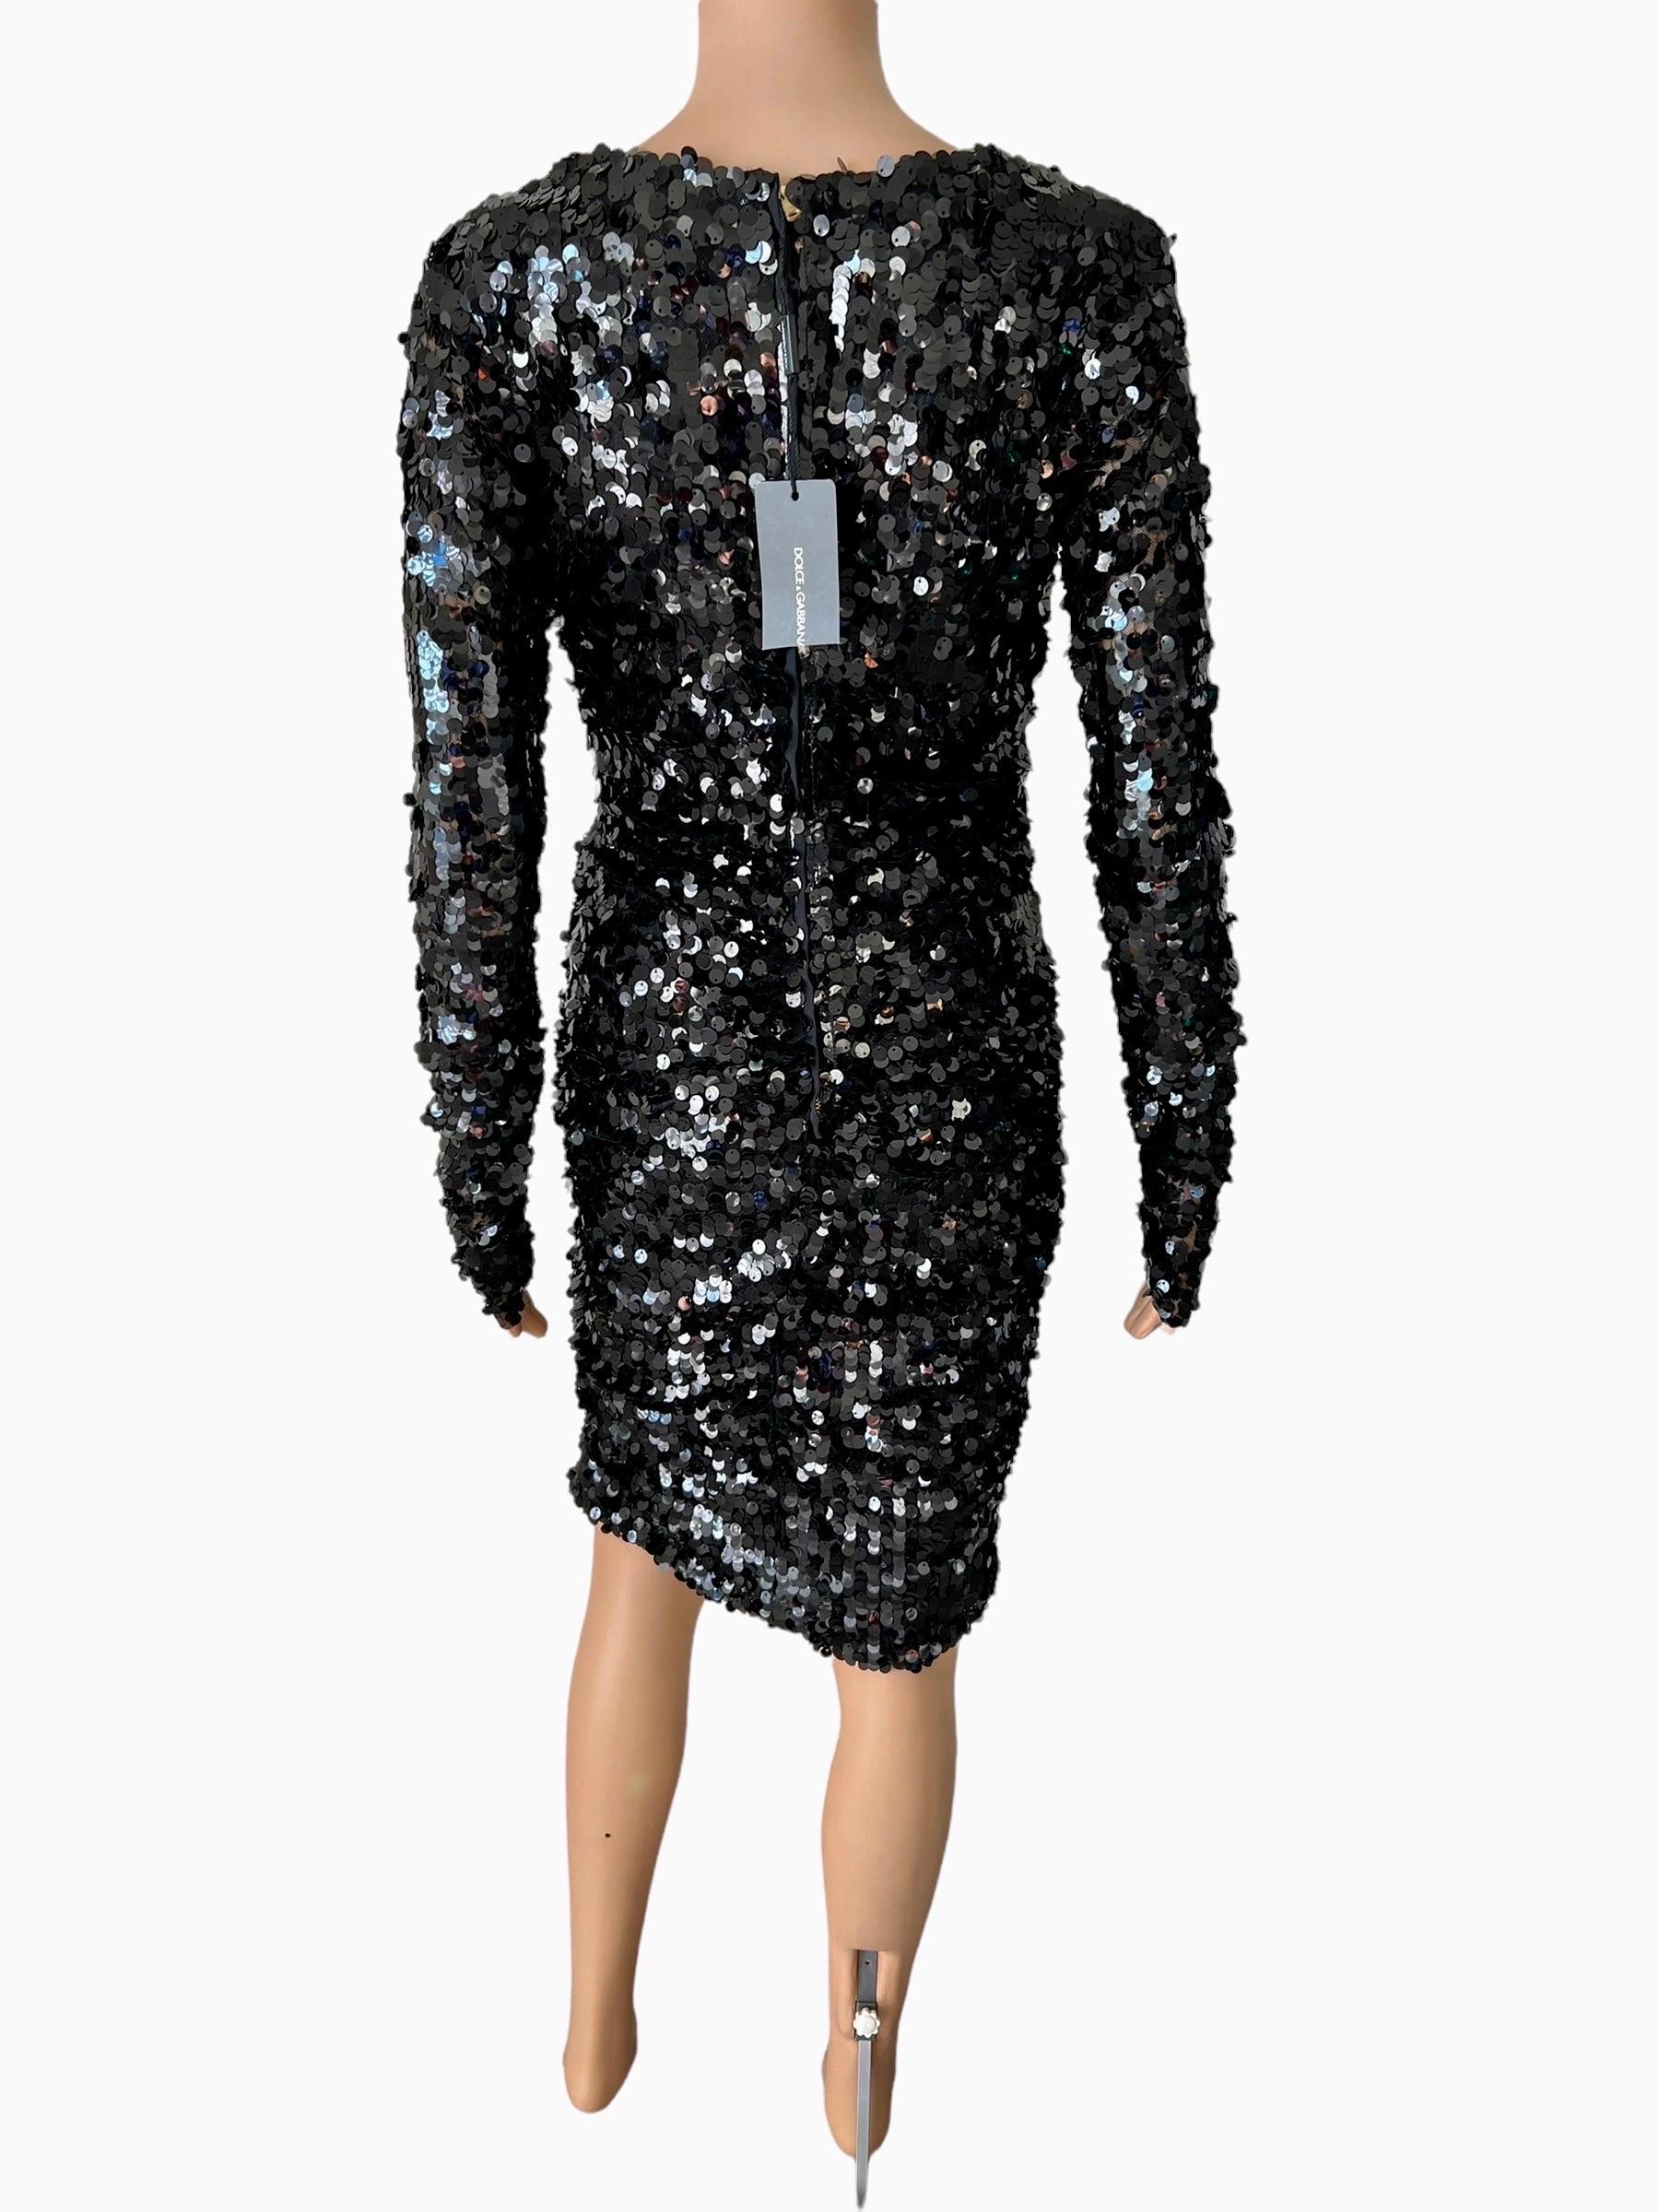 Dolce & Gabbana F/W 2011 Unworn Sequin Embellished Black Evening Dress 1